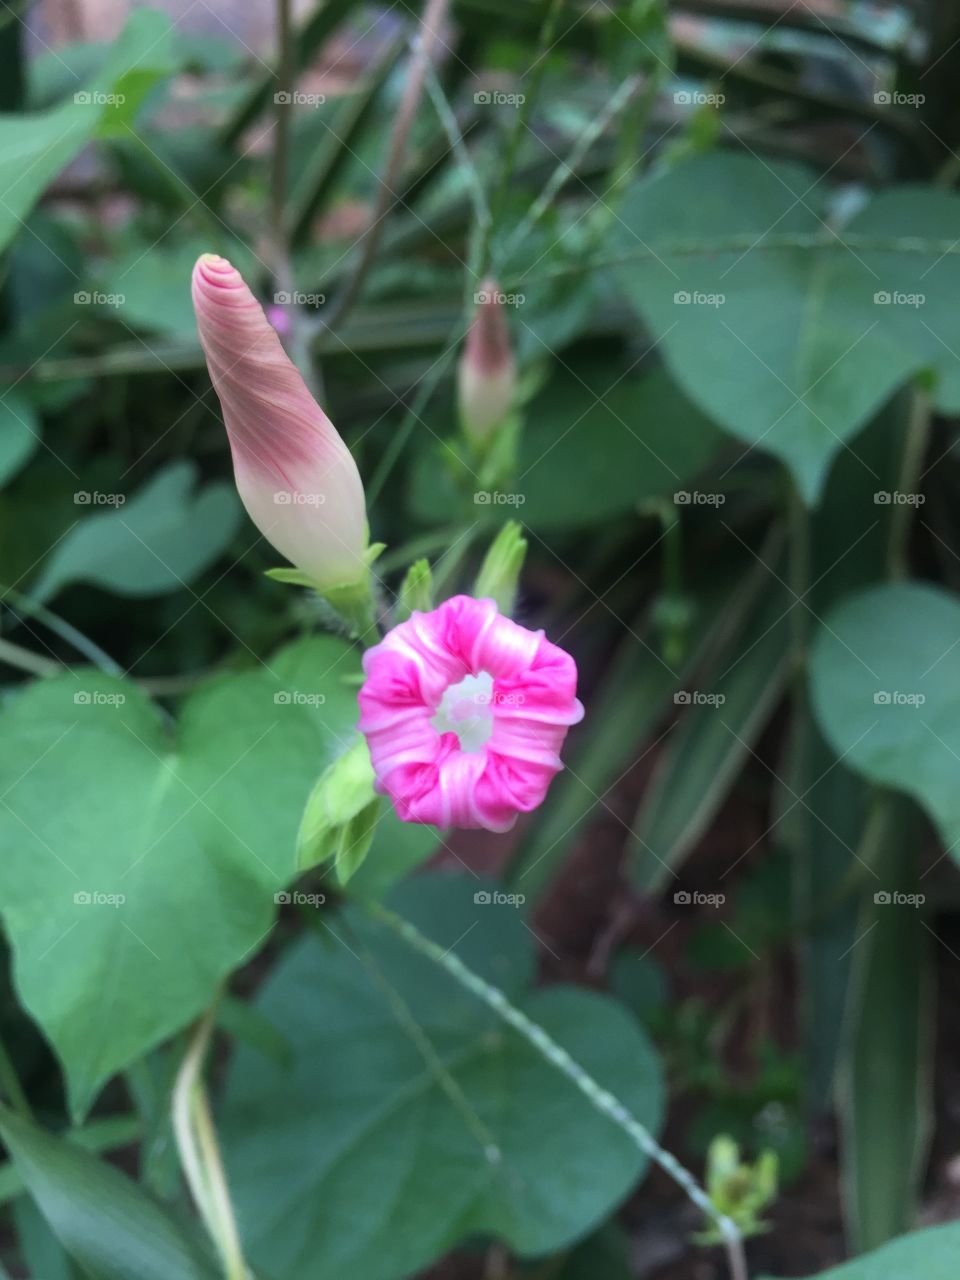 Flower bud